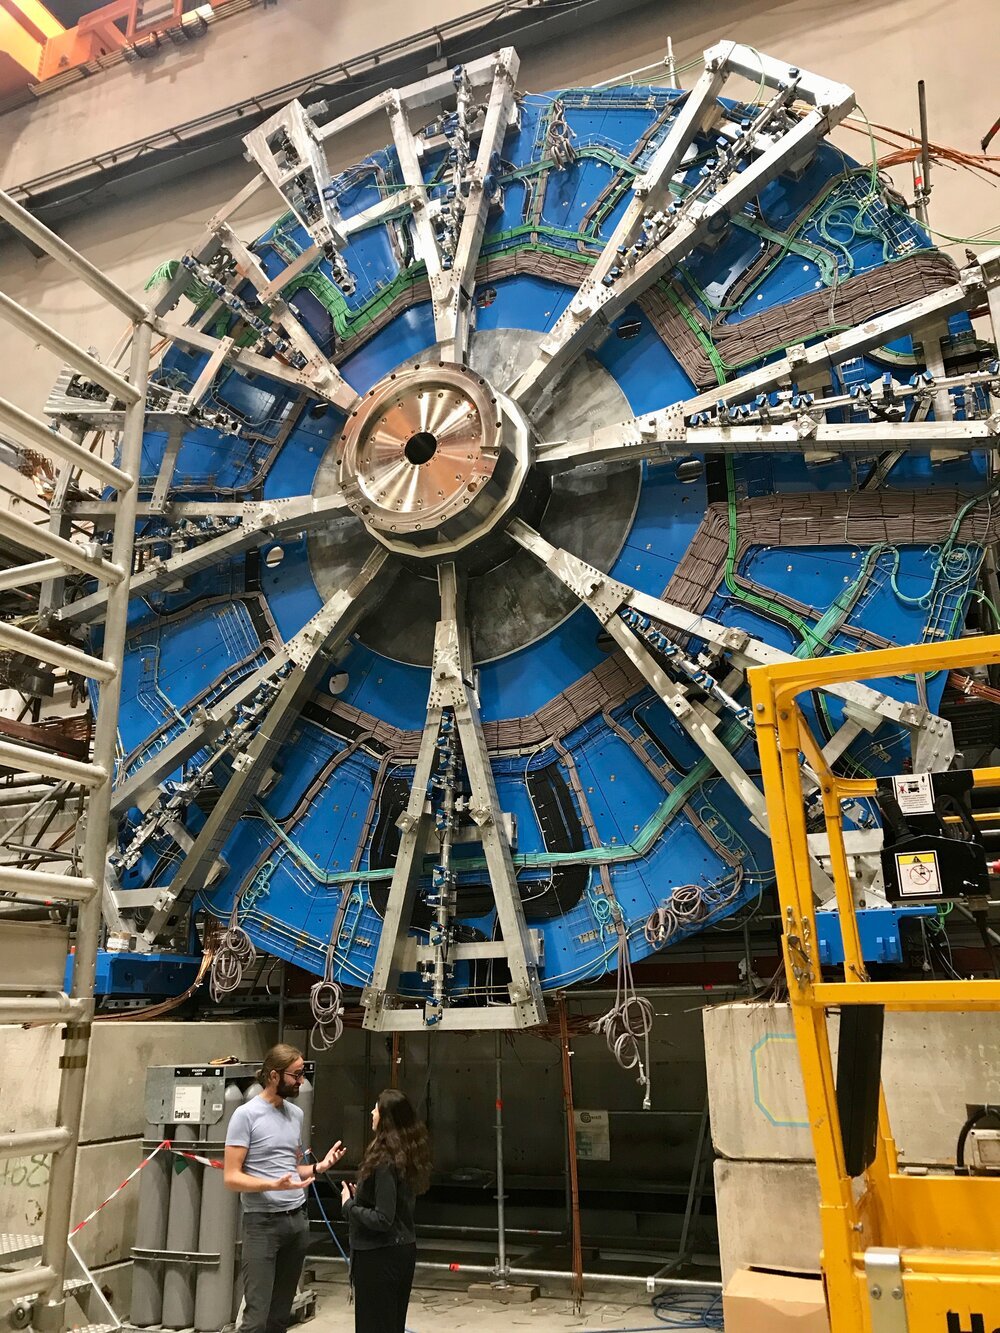 James+Beacham+and+Amy+Catanzano,+New+Small+Wheel,+CERN+2019,jpeg.jpeg